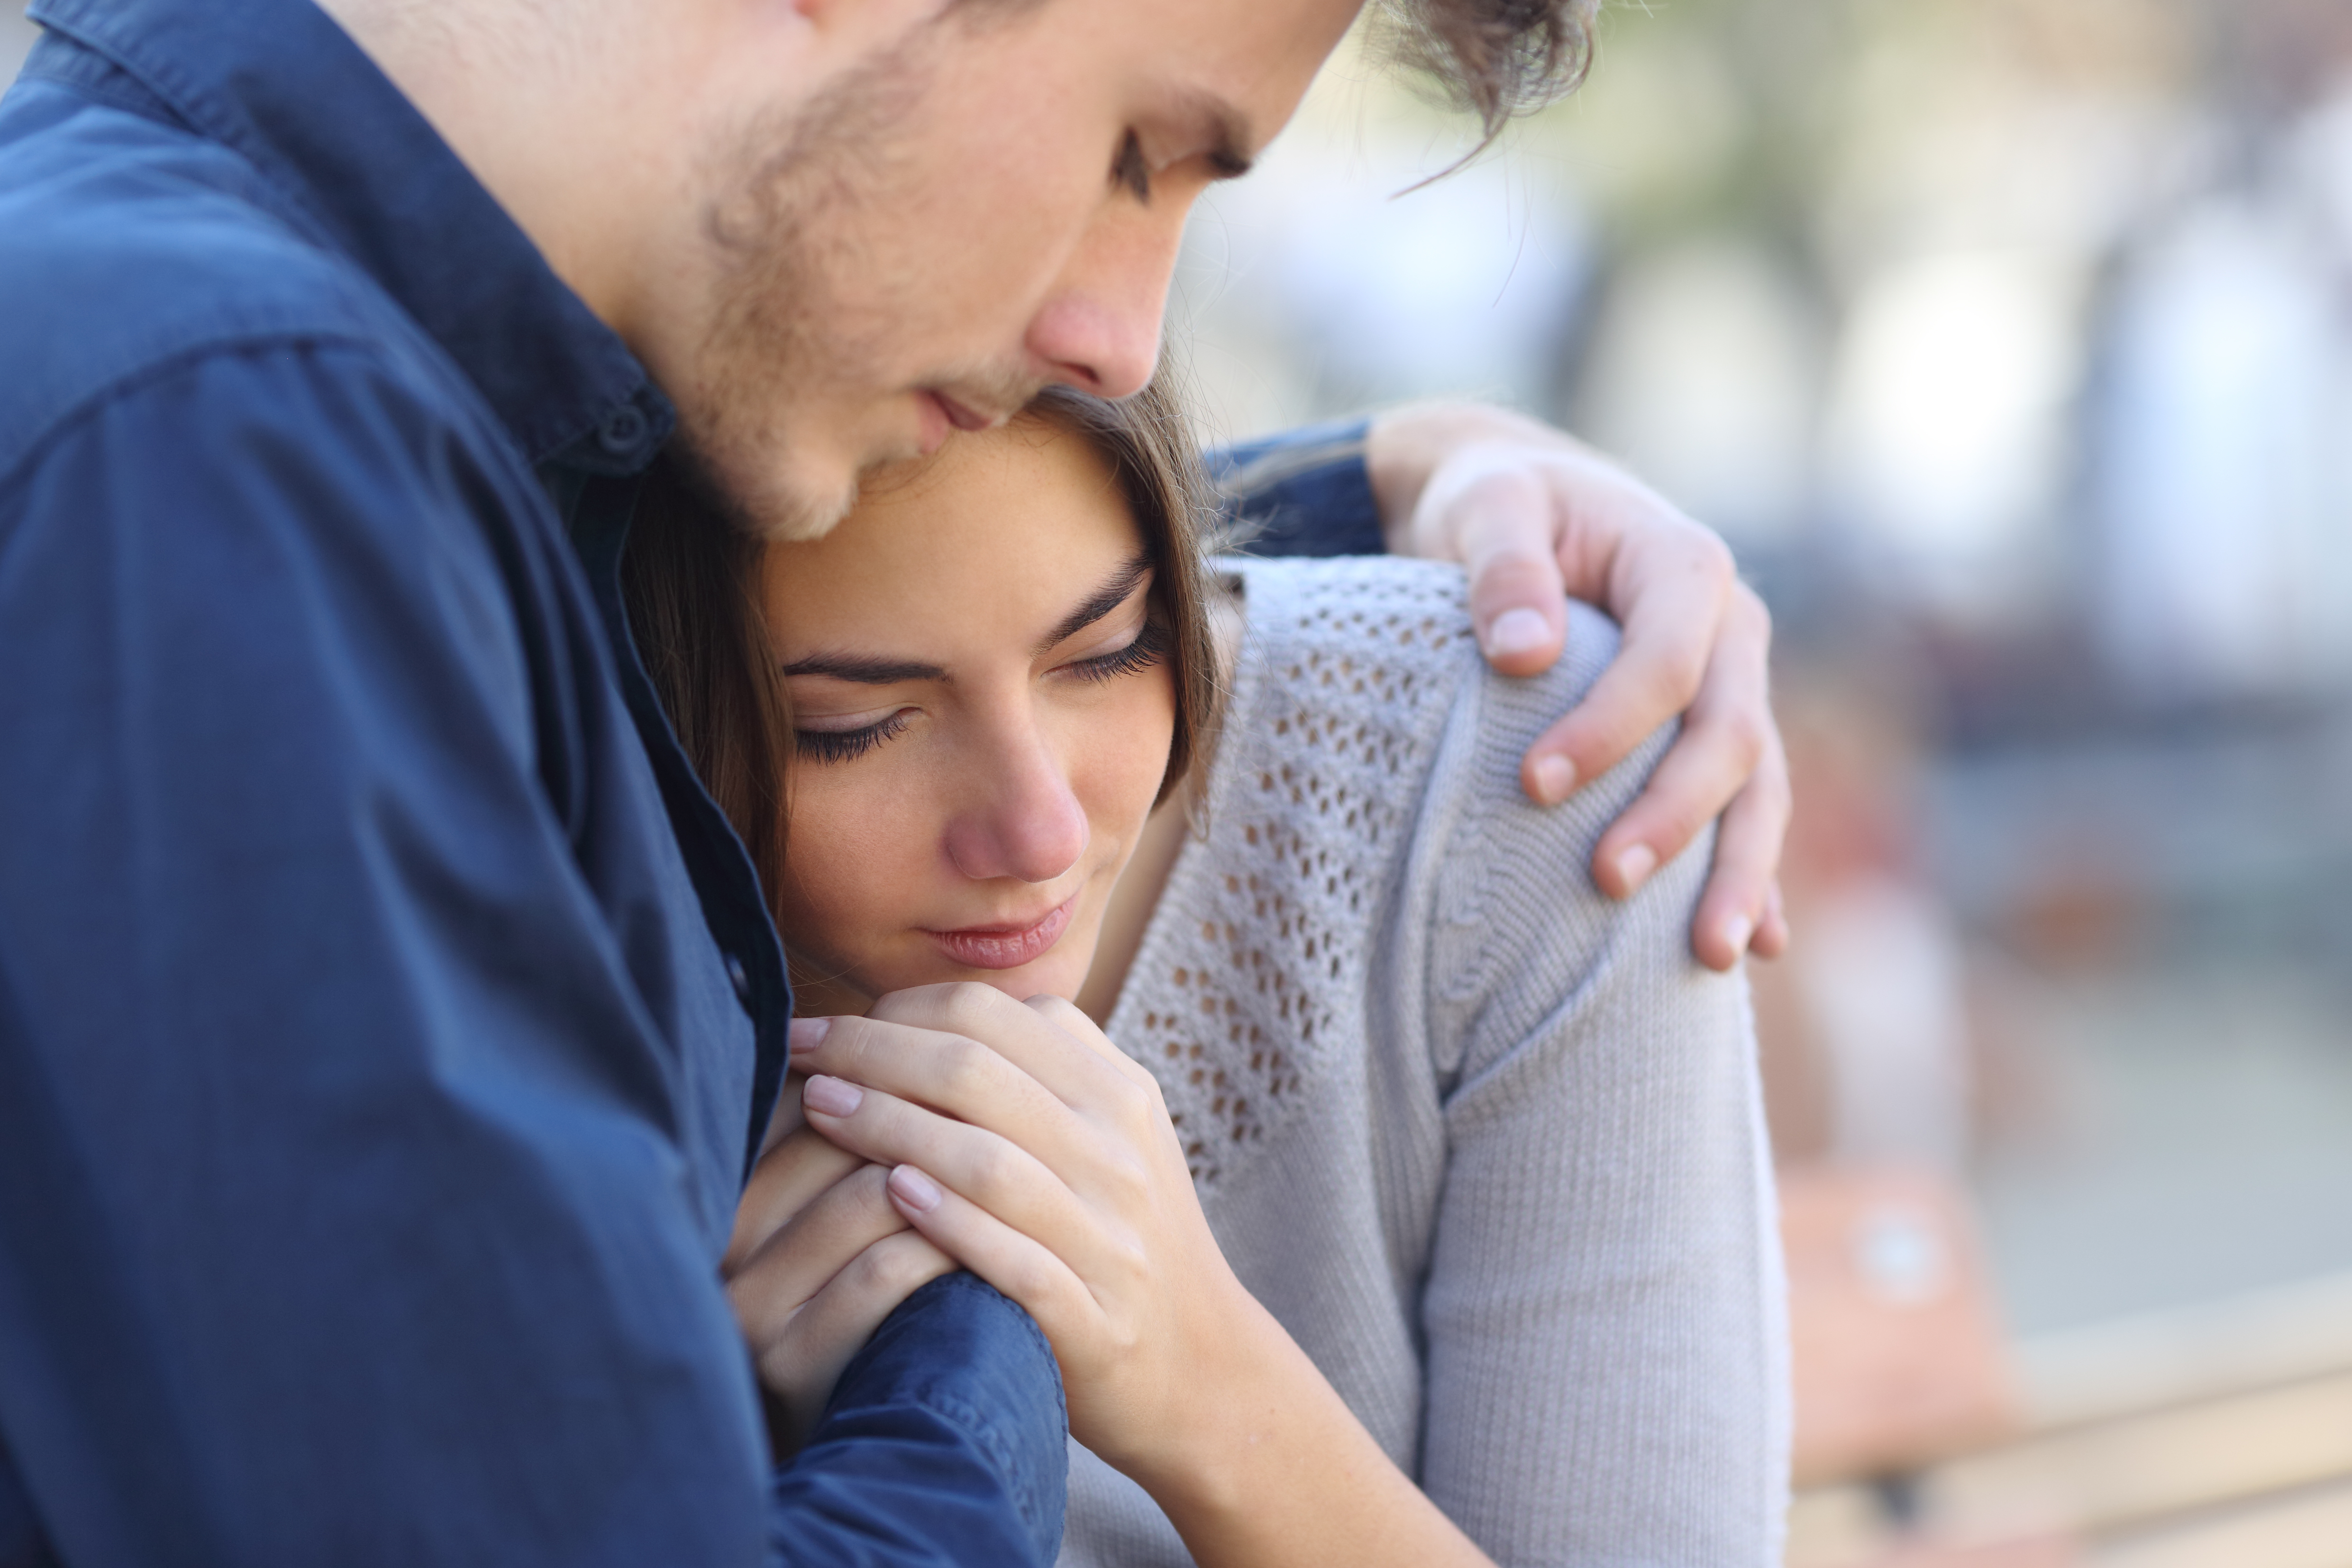 Un hombre abraza a su novia triste | Fuente: Shutterstock.com